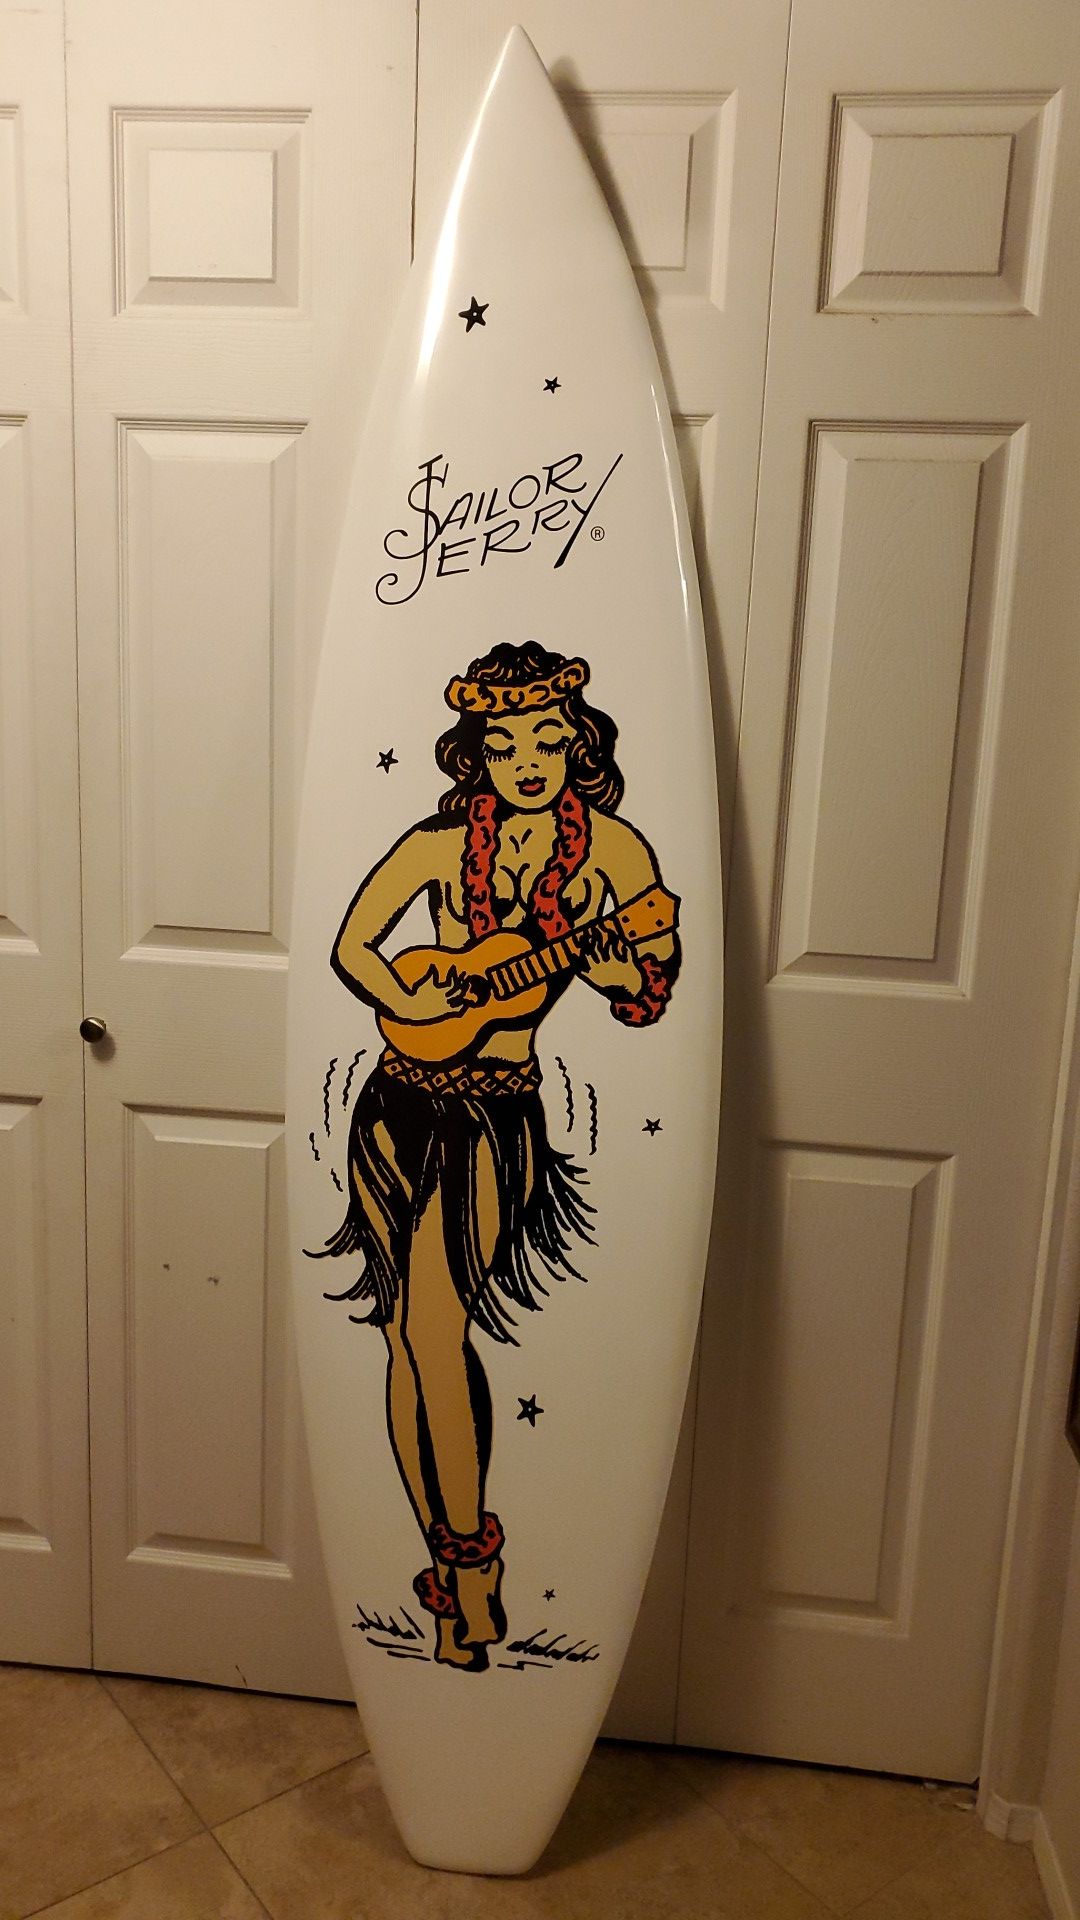 Sailor Jerry novelty display surfboard